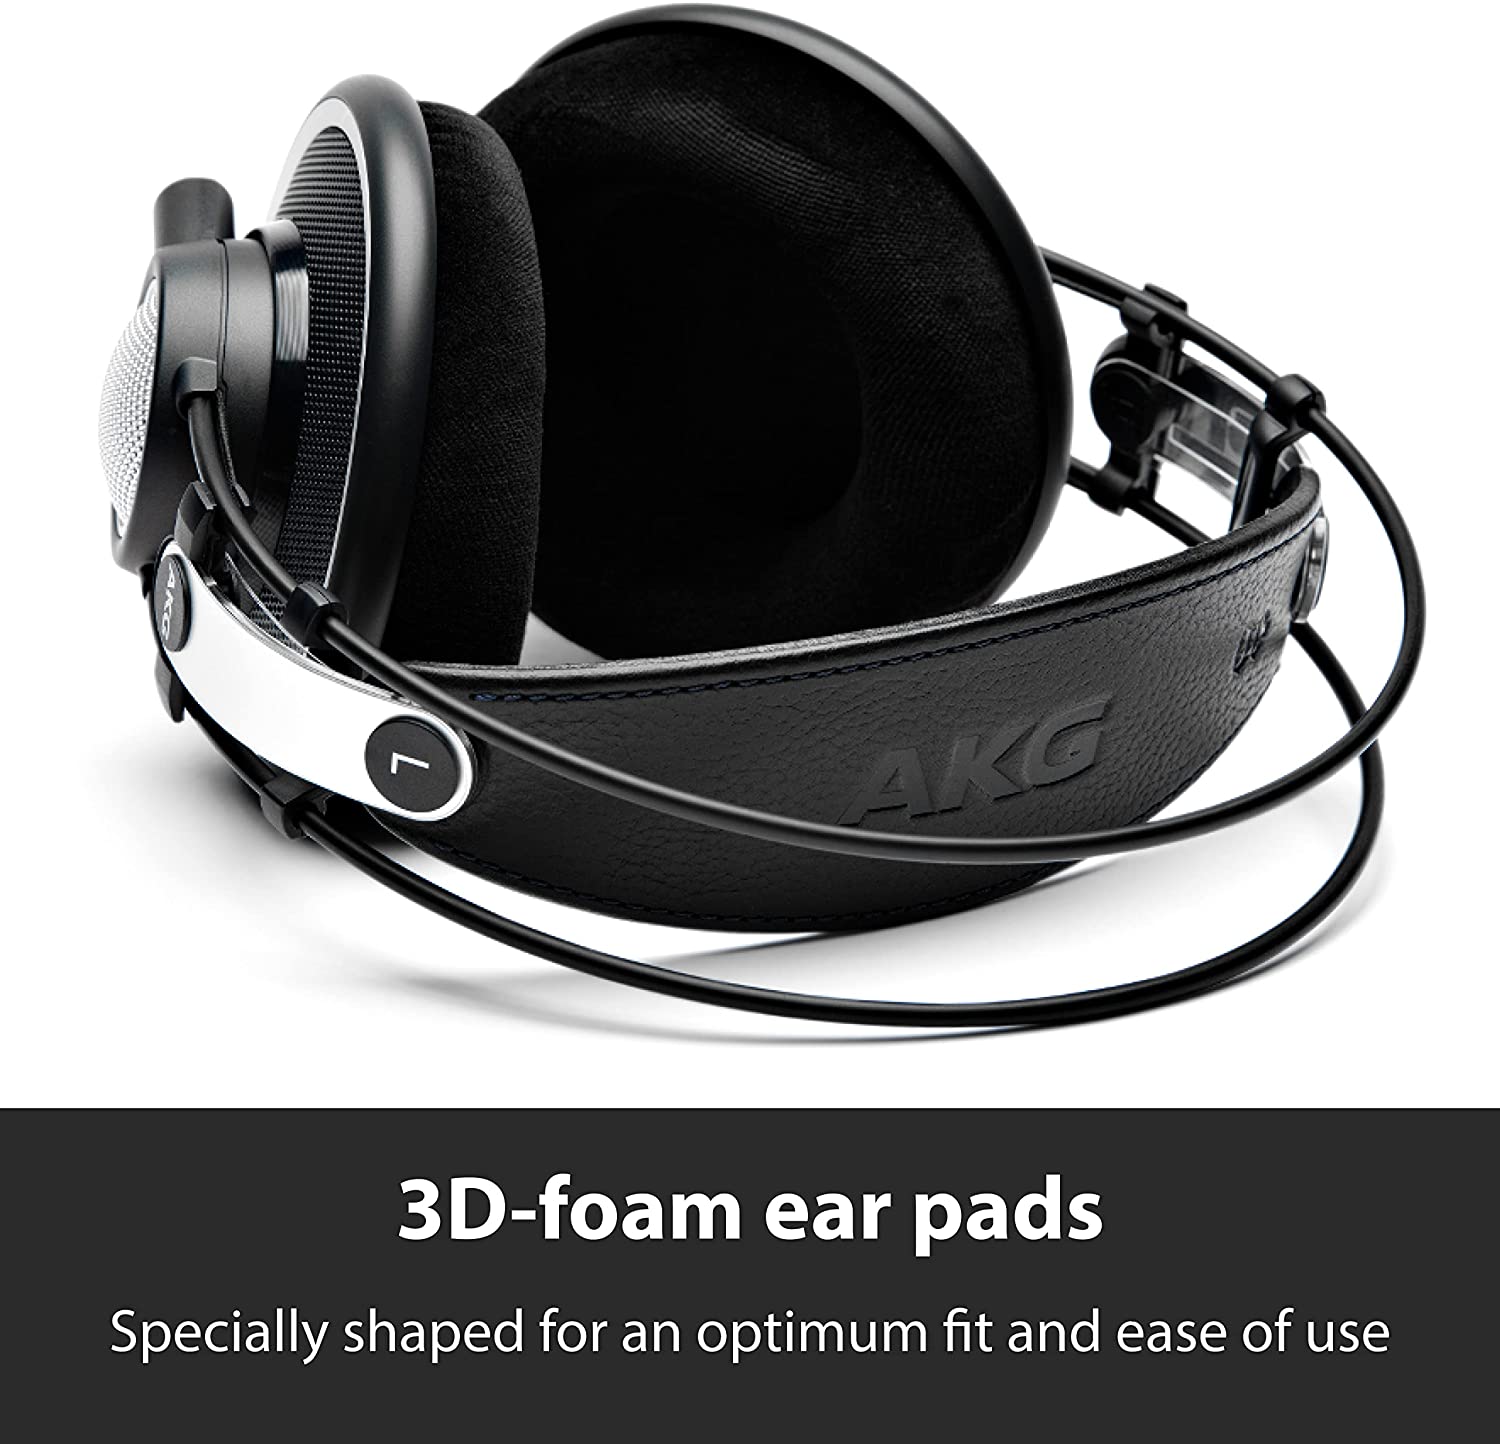 AKG K702 Open-back Over-ear Premium Studio Headphones